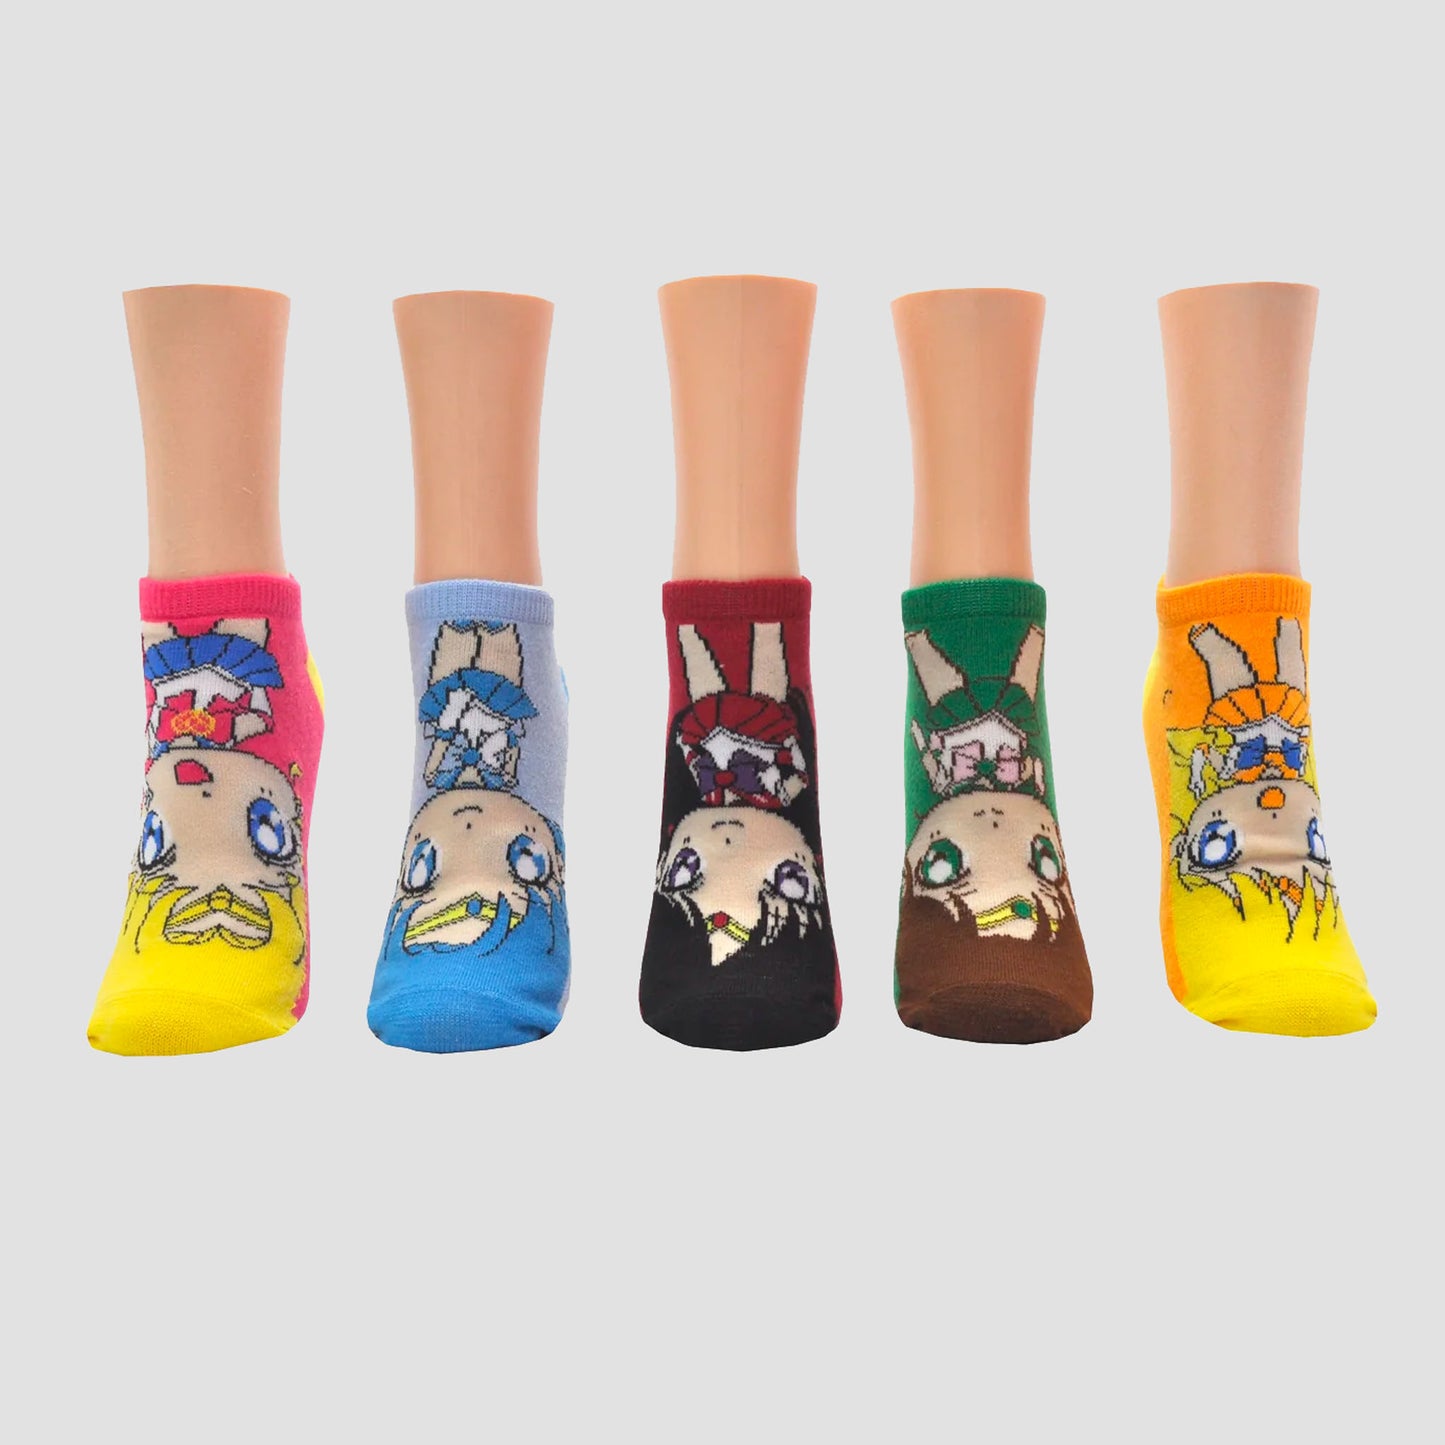 Witty Socks Sheer Elegance Anti-Skid Collection - 5 Pairs/ Set